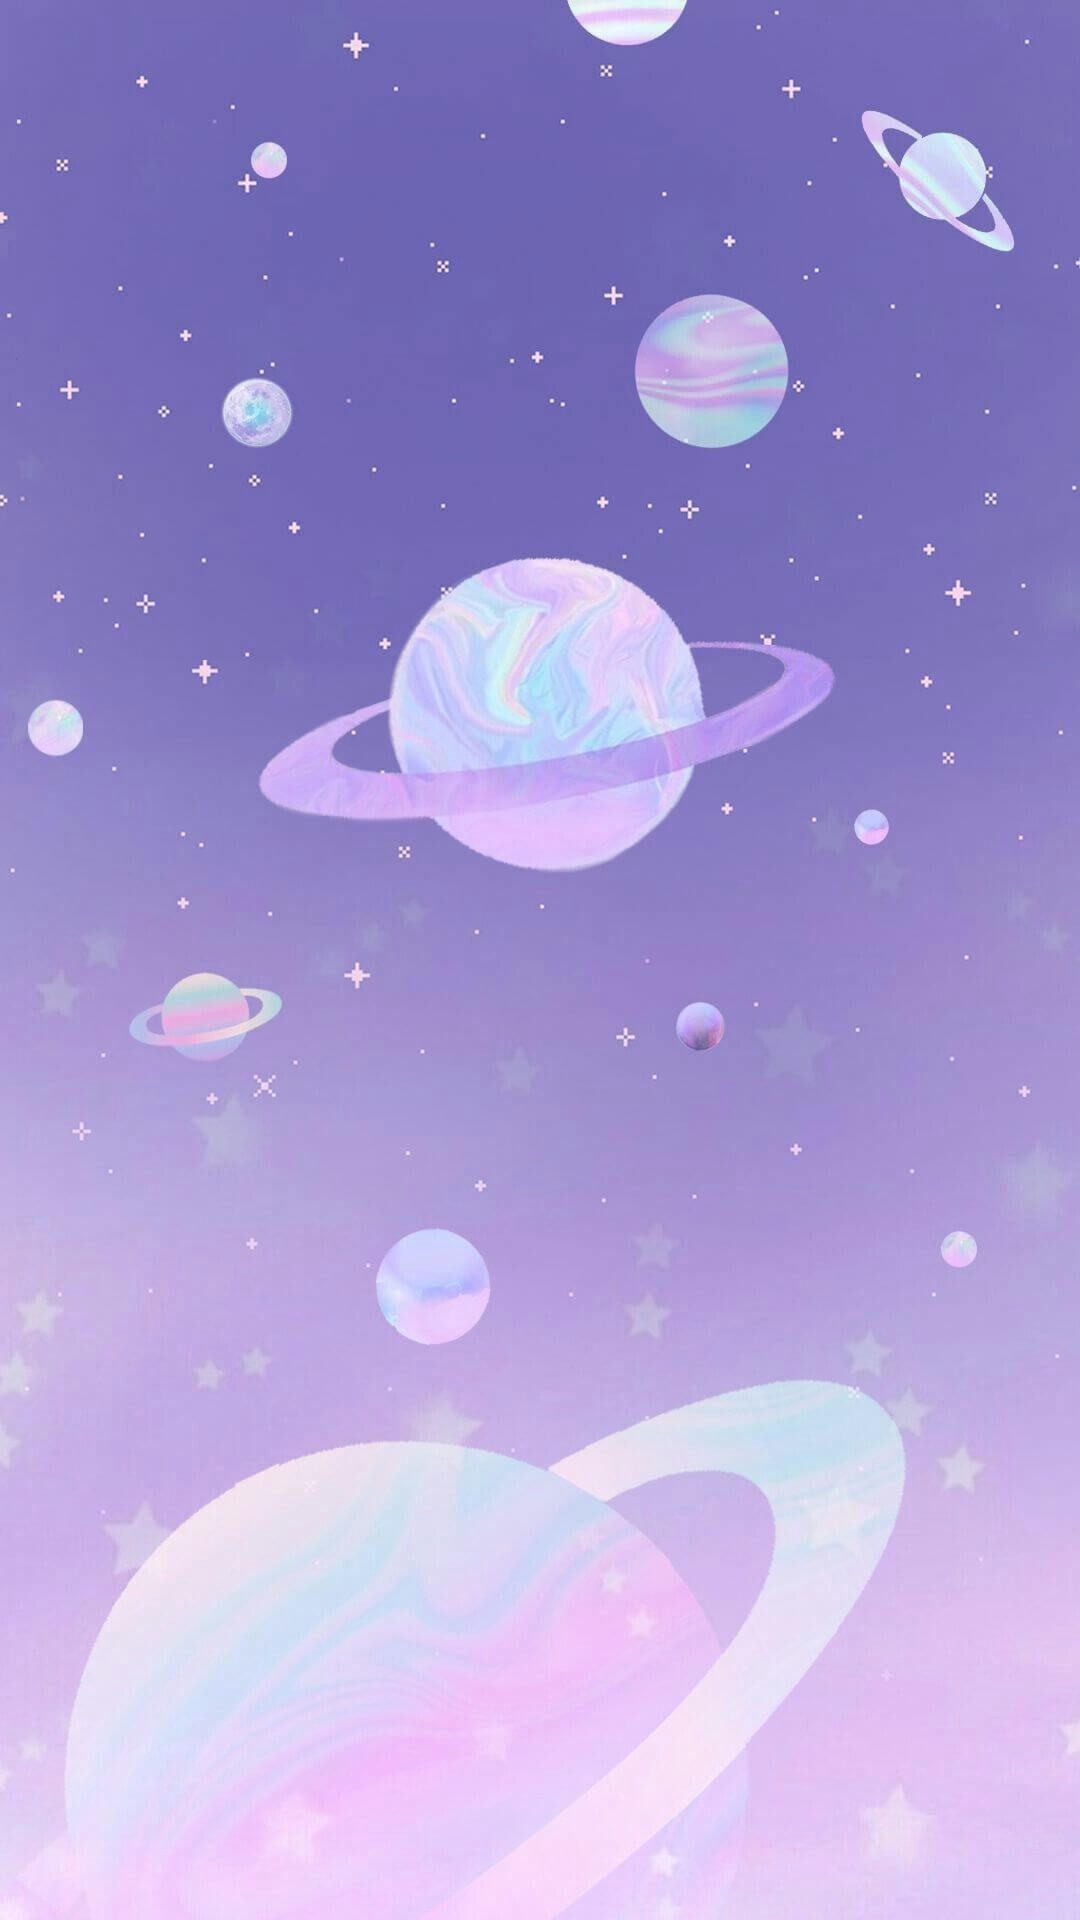 Cute Kawaii Wallpaper. Space phone .com